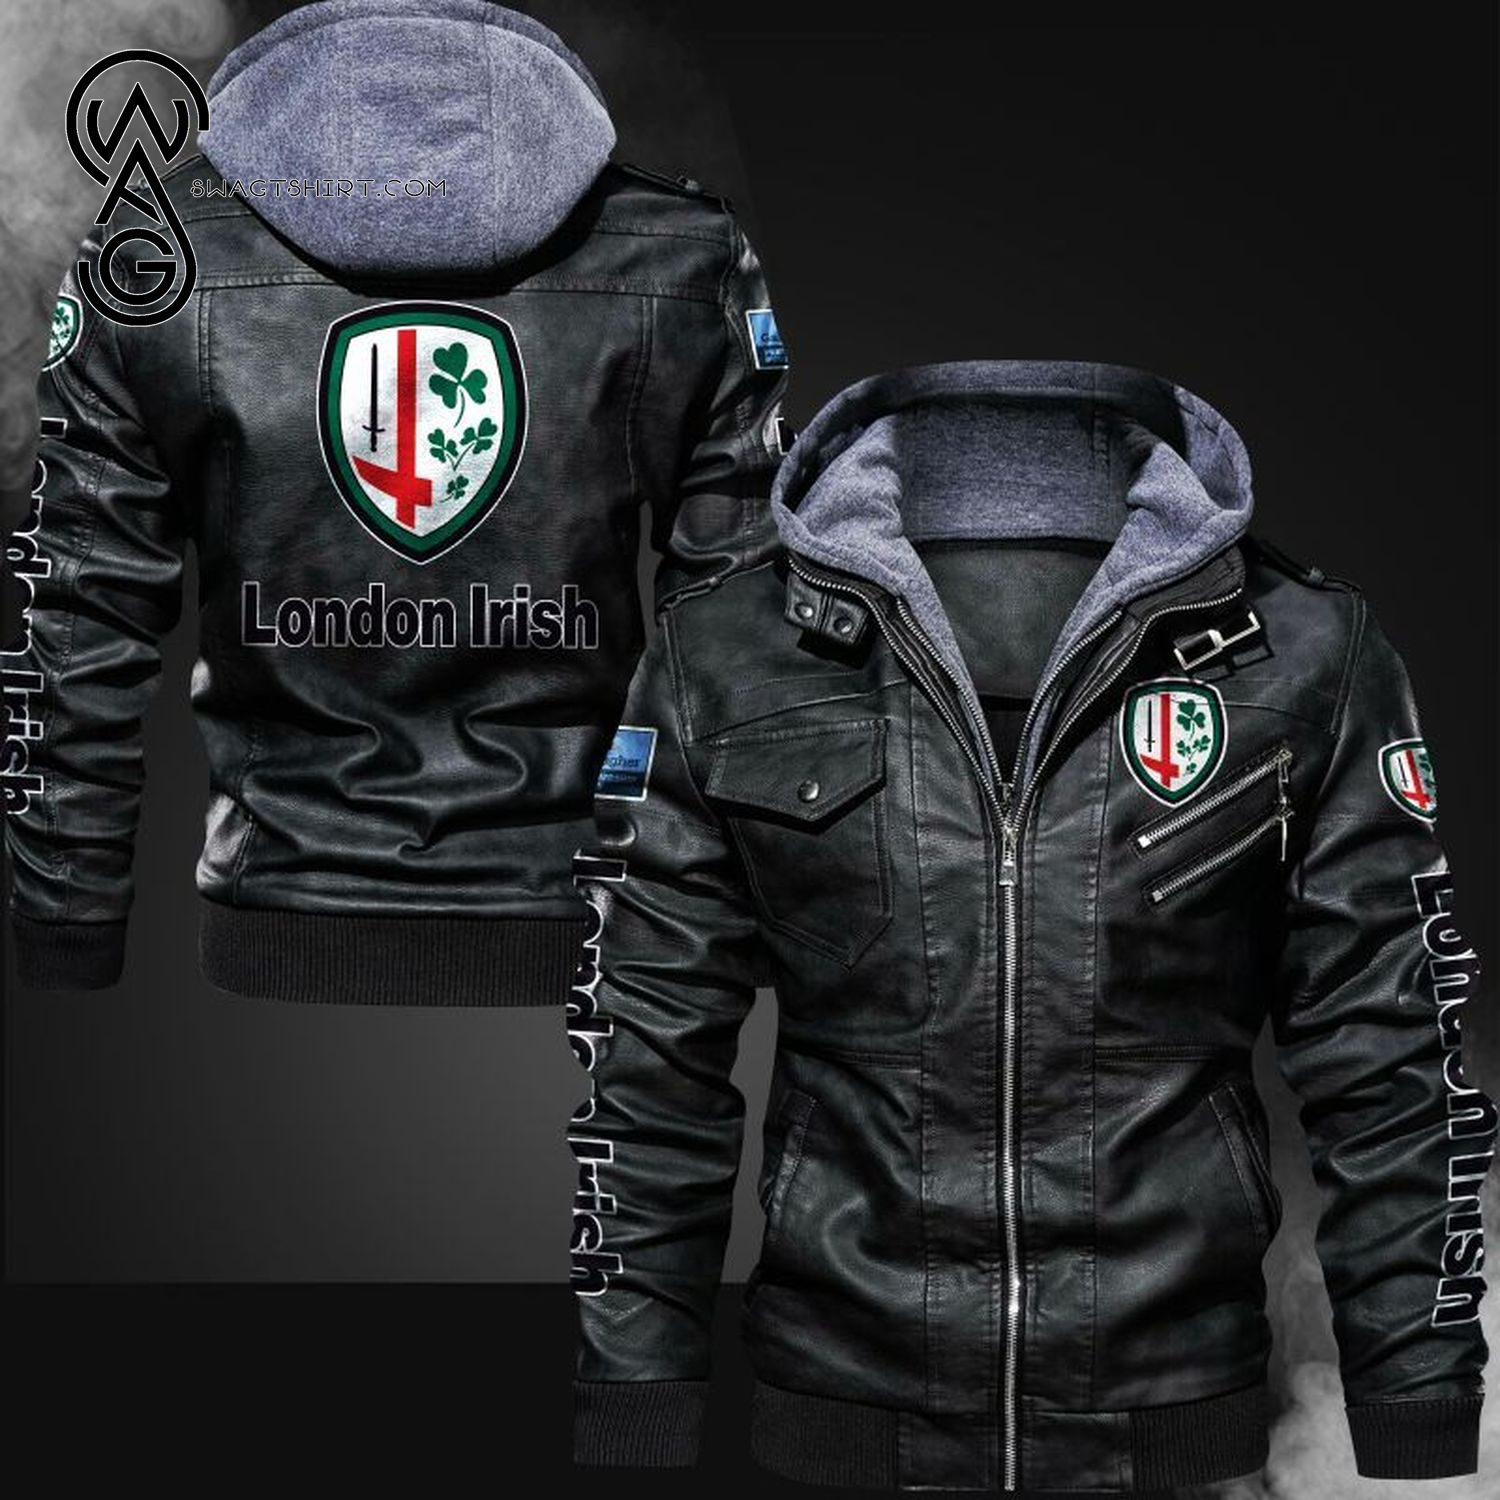 London Irish Football Club Leather Jacket